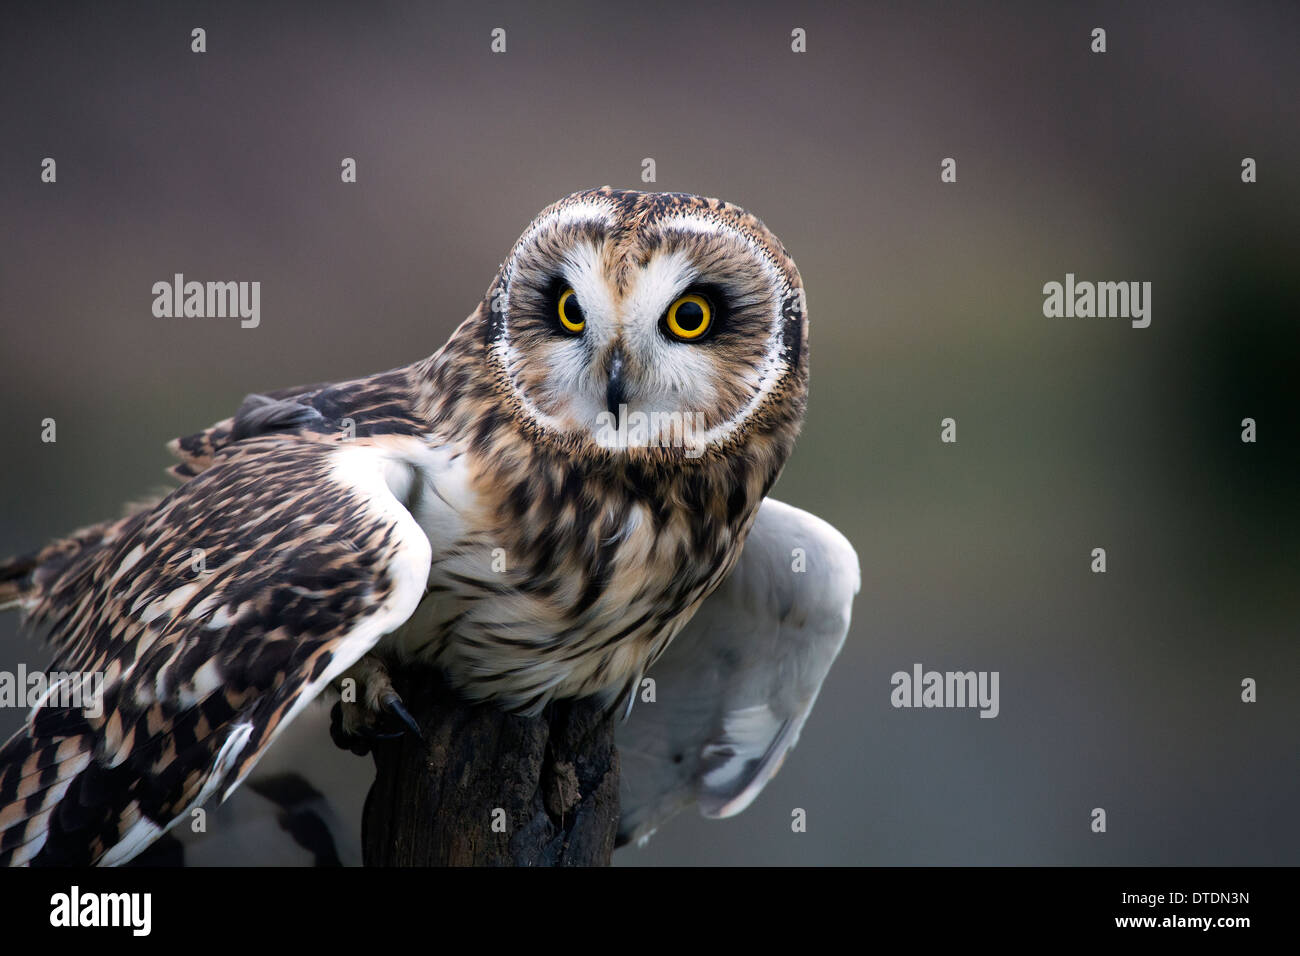 owl portrait Stock Photo